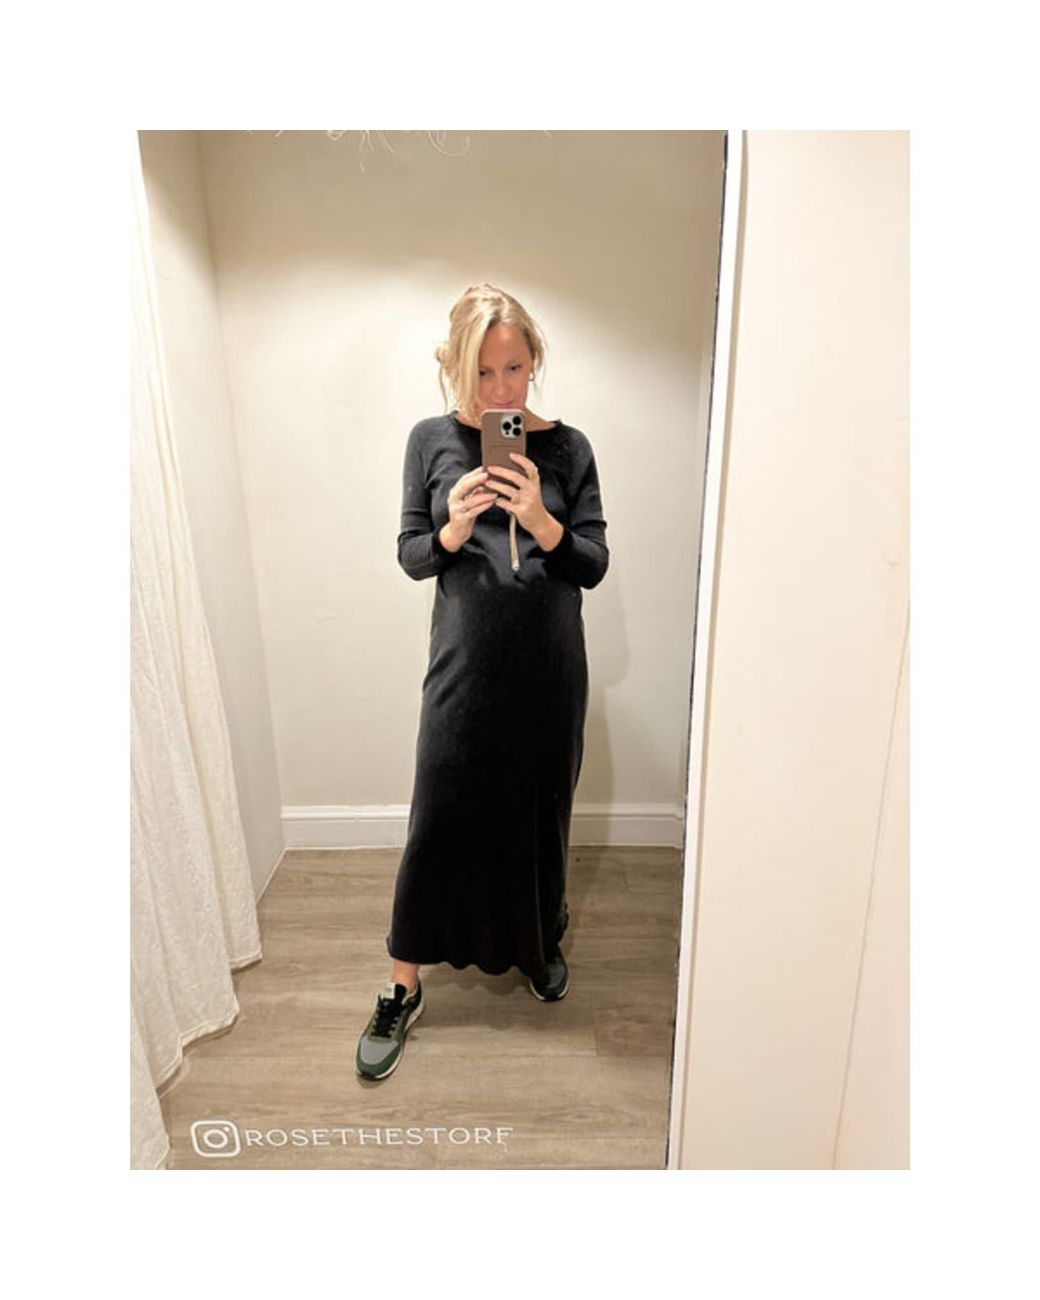 AV Sonoma 14 Dress in Vintage Black – shopatanna